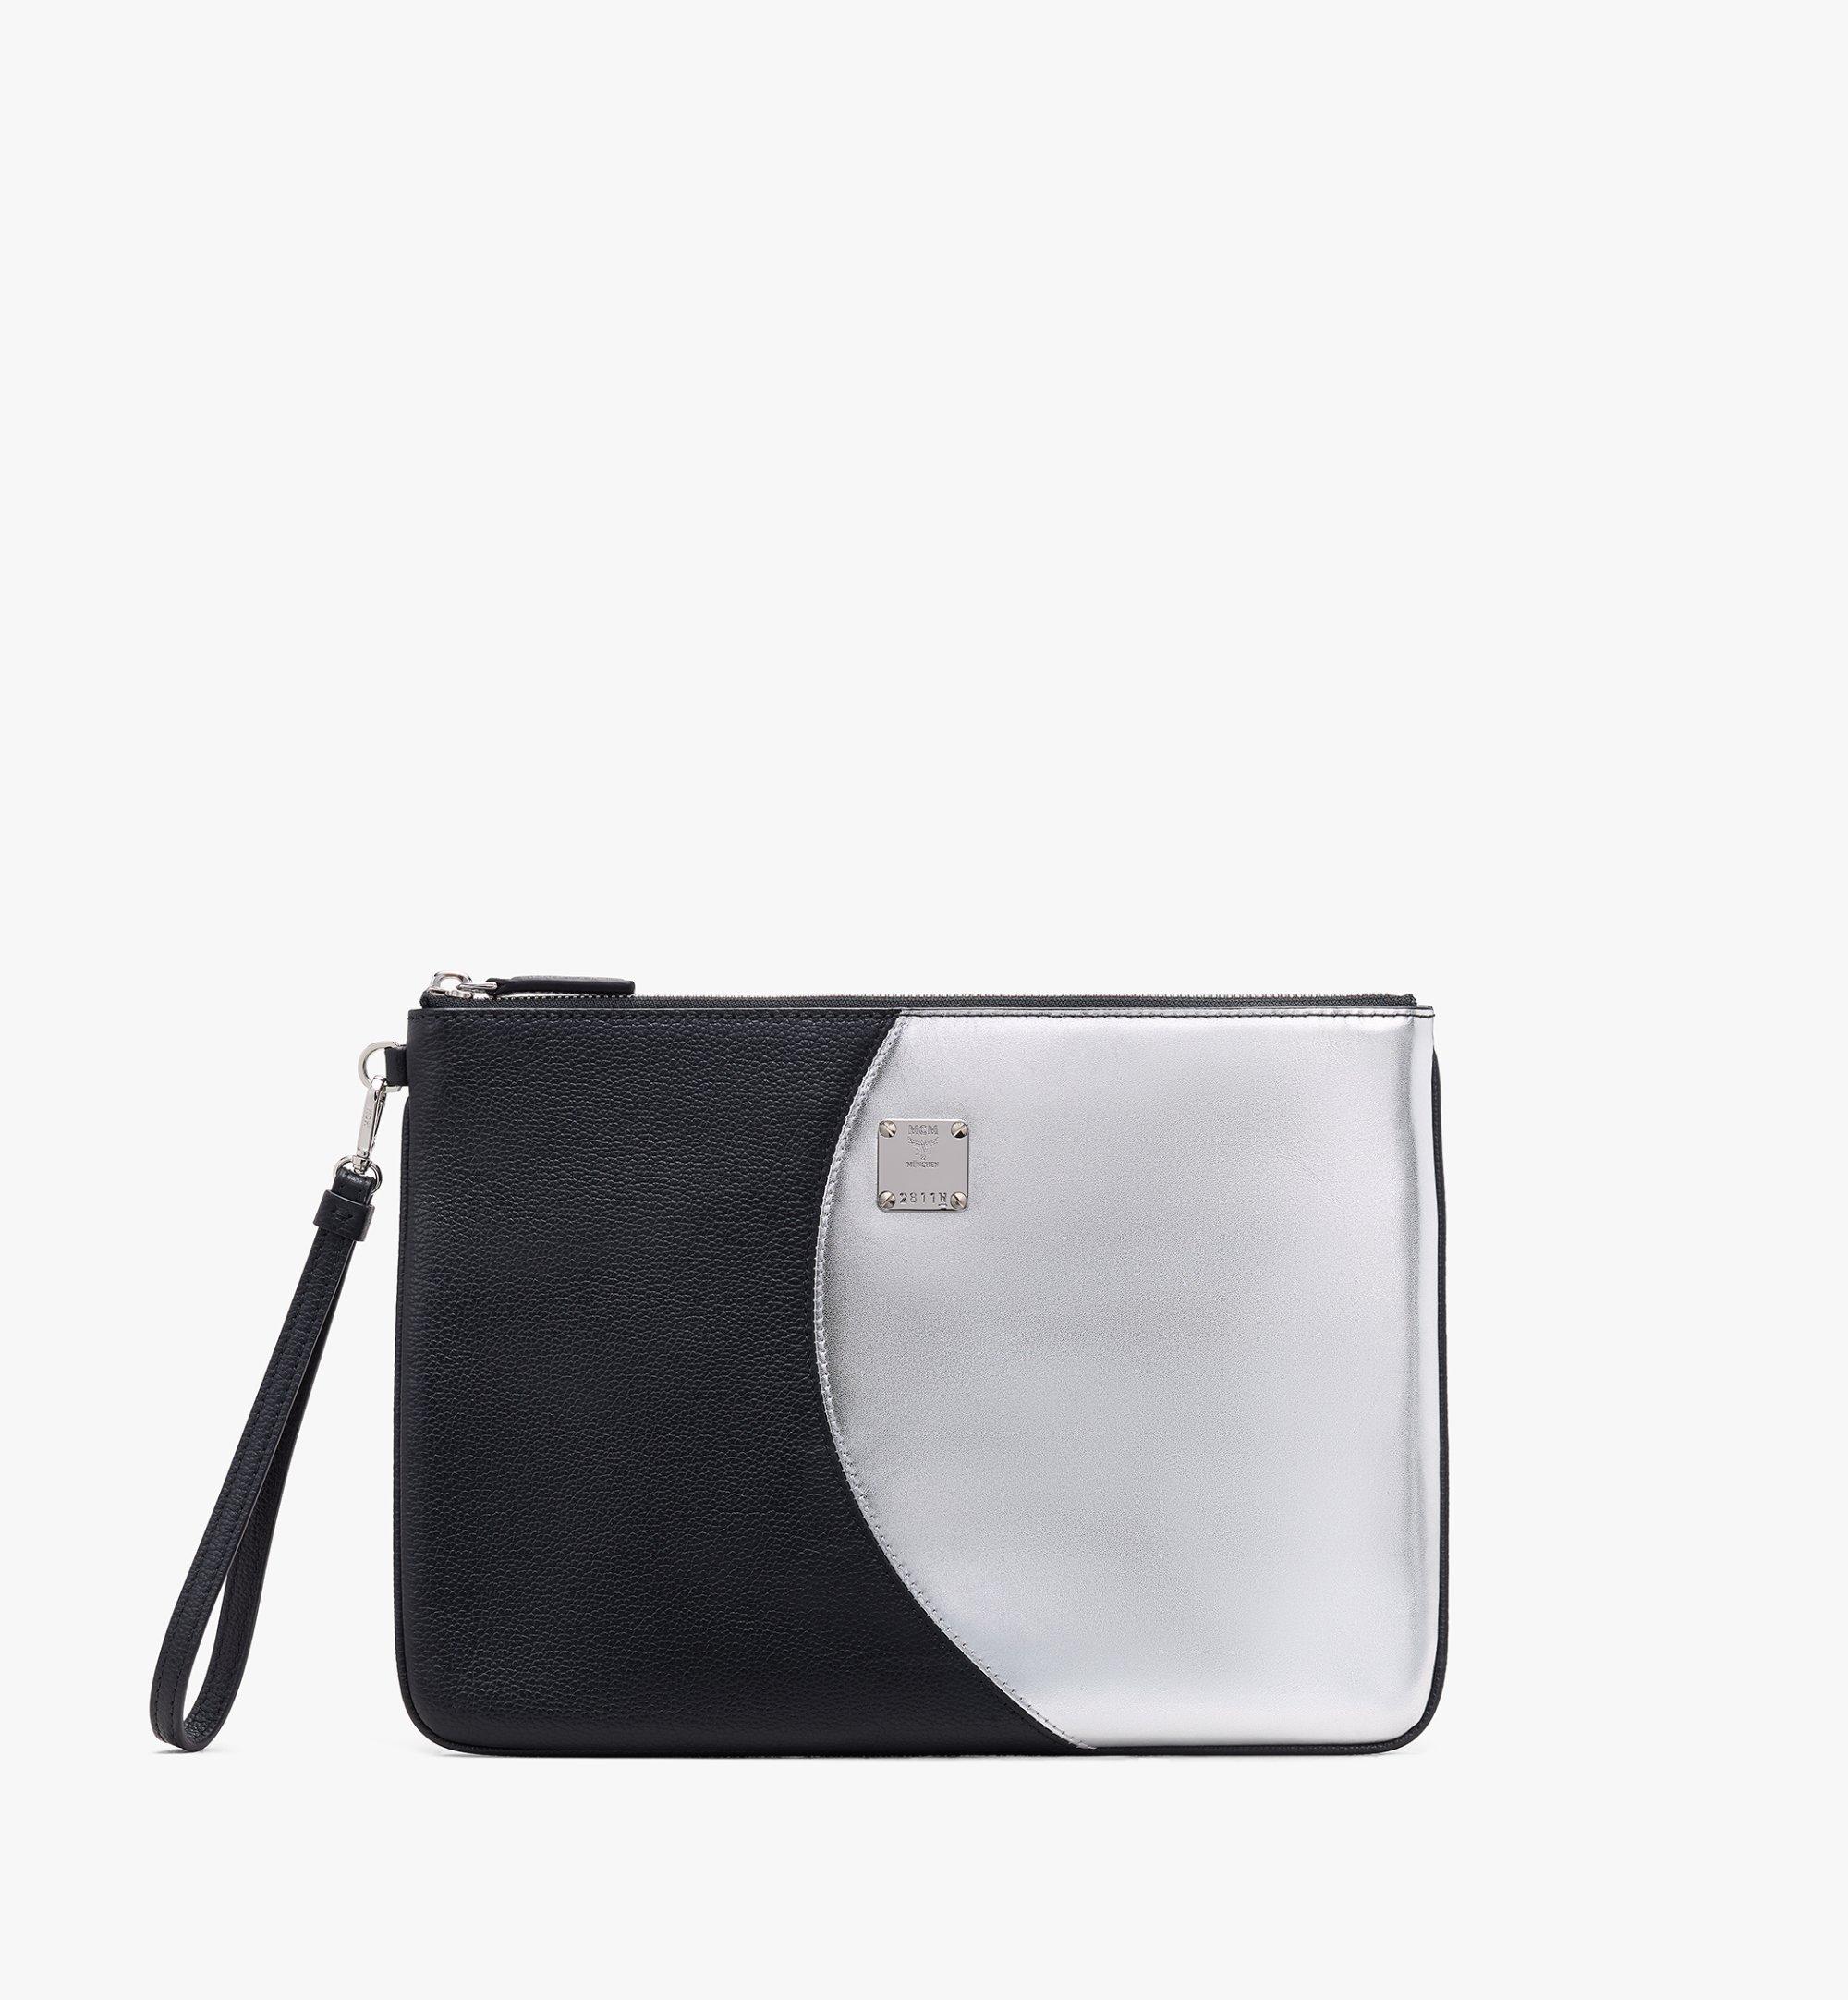 Mcm Essential Disco Camera Bag - Black - Shoulder Bags